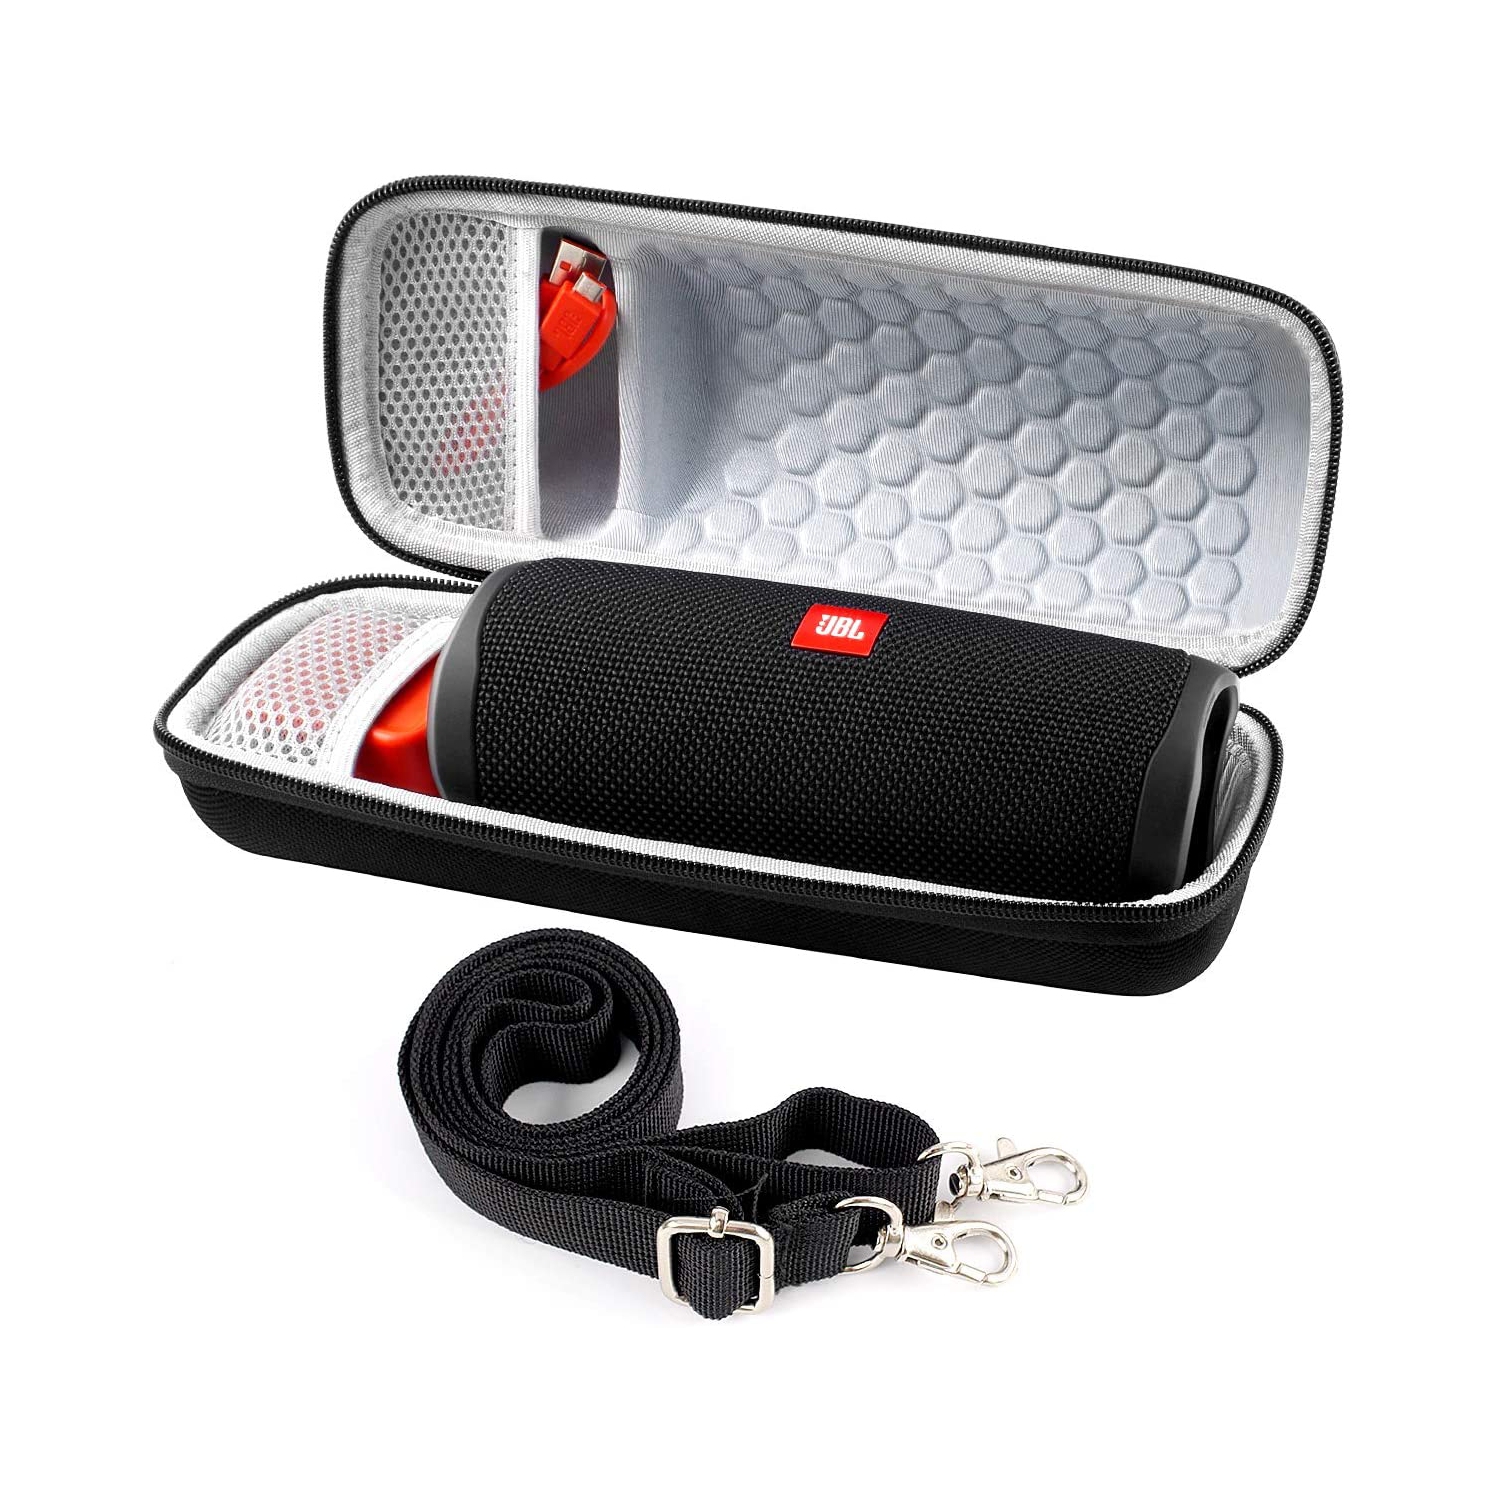 axGear Hard Carrying Travel Case for JBL Flip 5/Flip 4 Splash Proof Bluetooth Portable Stereo Speaker, Fits USB Cable.